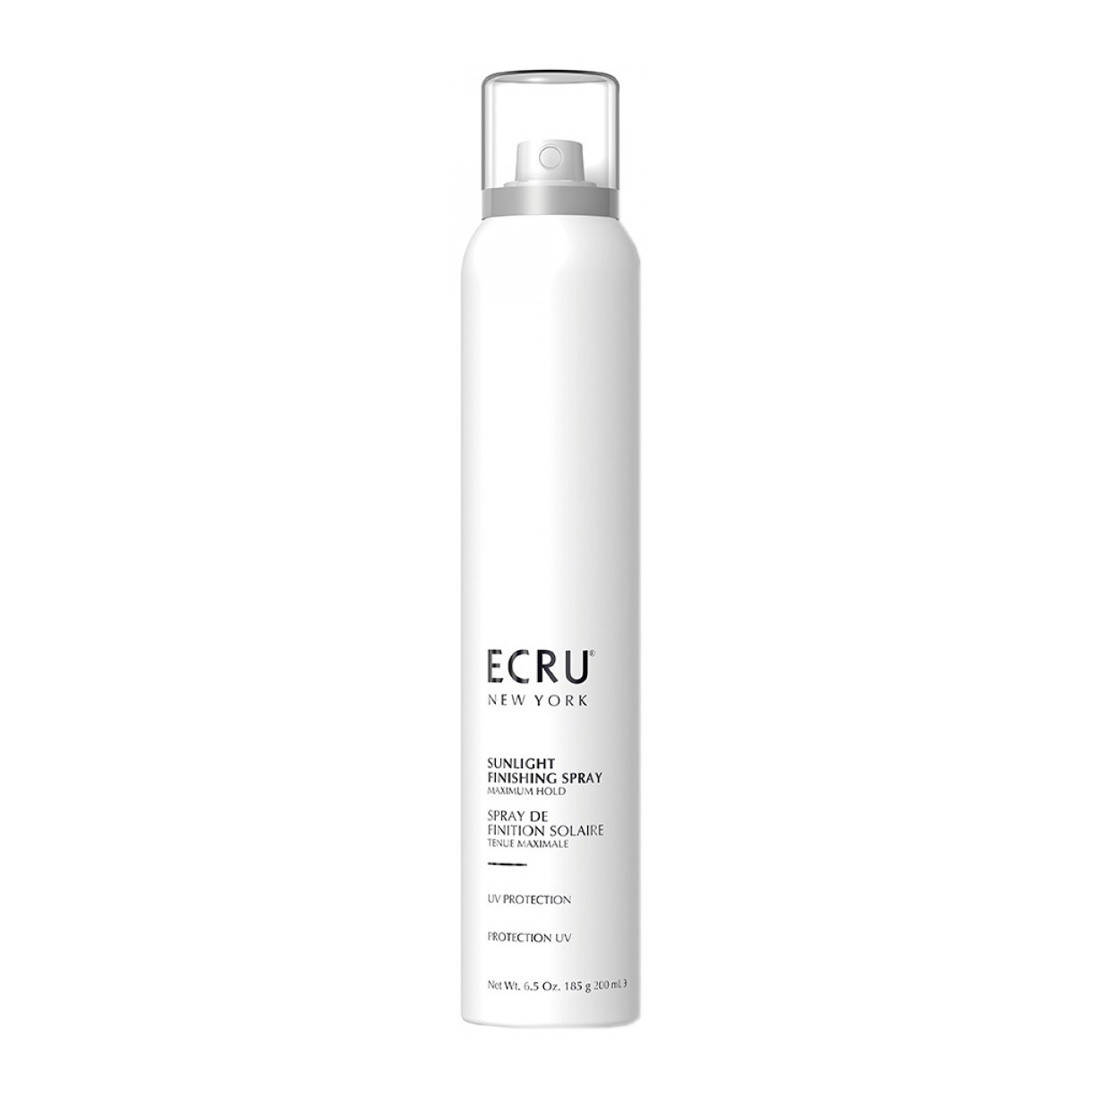 ECRU New York Sunlight Finishing Spray Maximum Hold - Завершающий спрей для волос